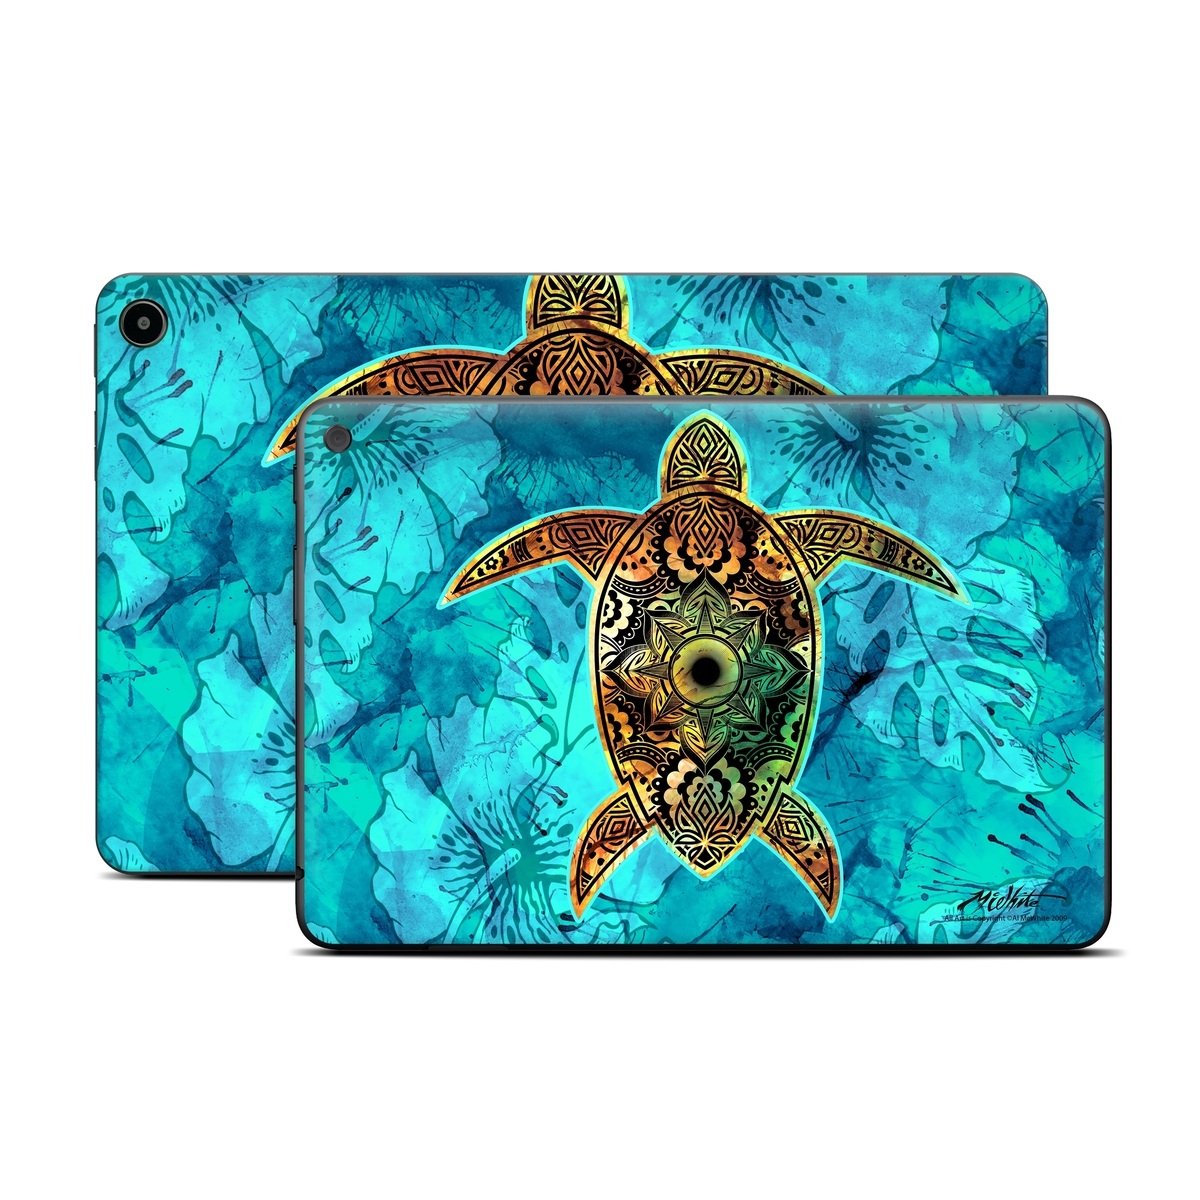 Amazon Fire Tablet Series Skin Skin design of Sea turtle, Green sea turtle, Turtle, Hawksbill sea turtle, Tortoise, Reptile, Loggerhead sea turtle, Illustration, Art, Pattern, with blue, black, green, gray, red colors